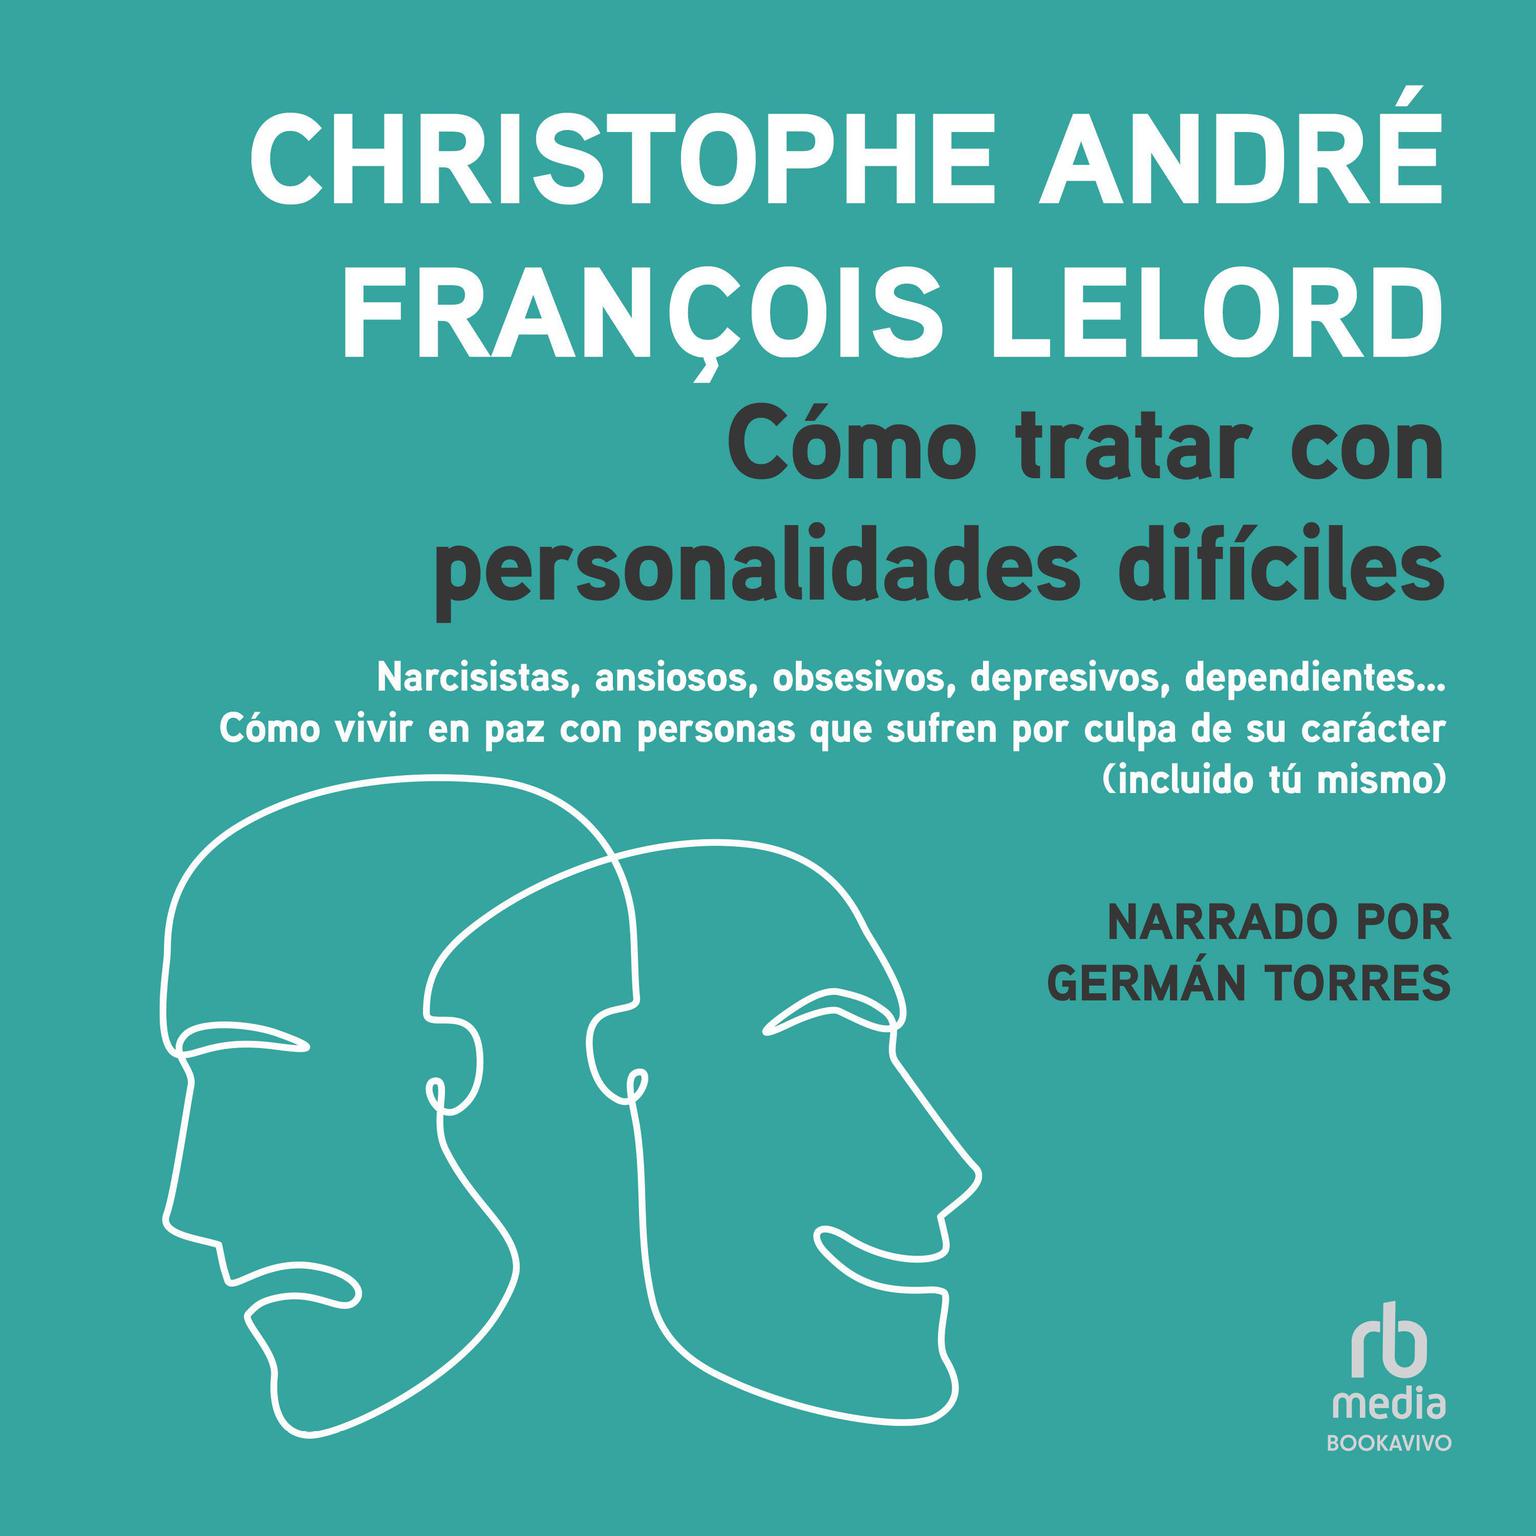 Cómo tratar con personalidades difíciles Audiobook, by Christophe André